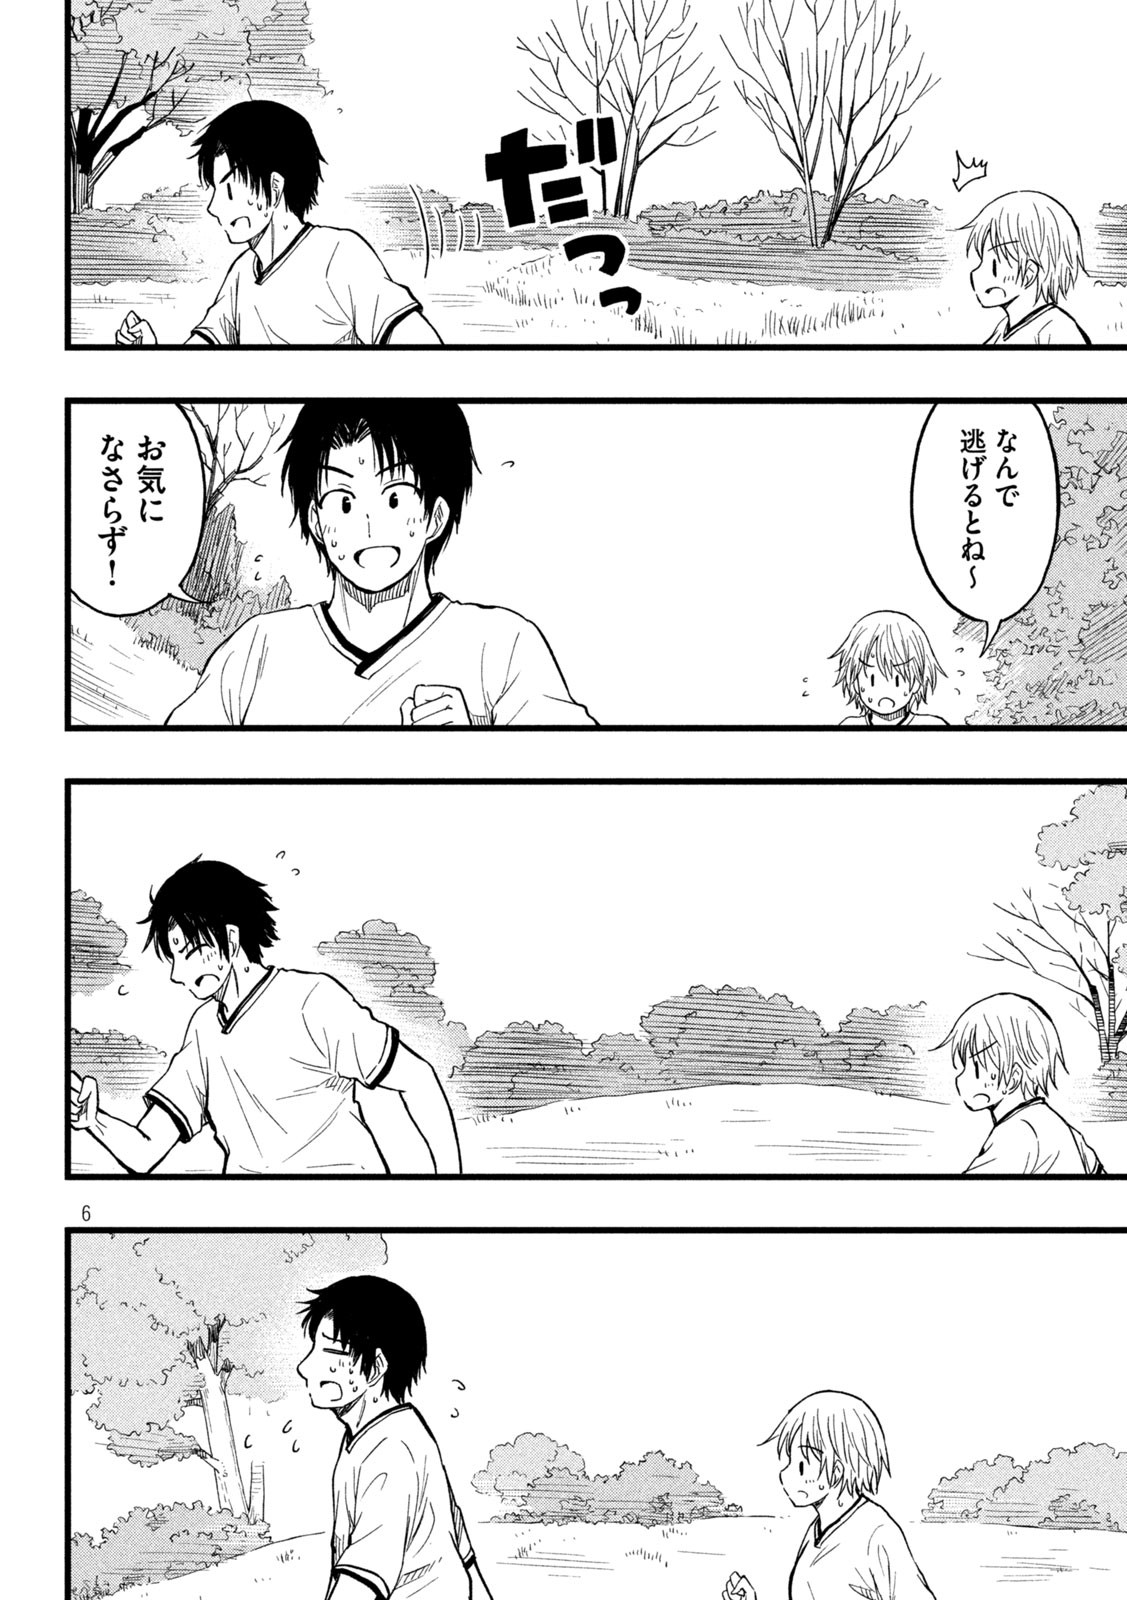 Koharu haru! - Chapter 86 - Page 2